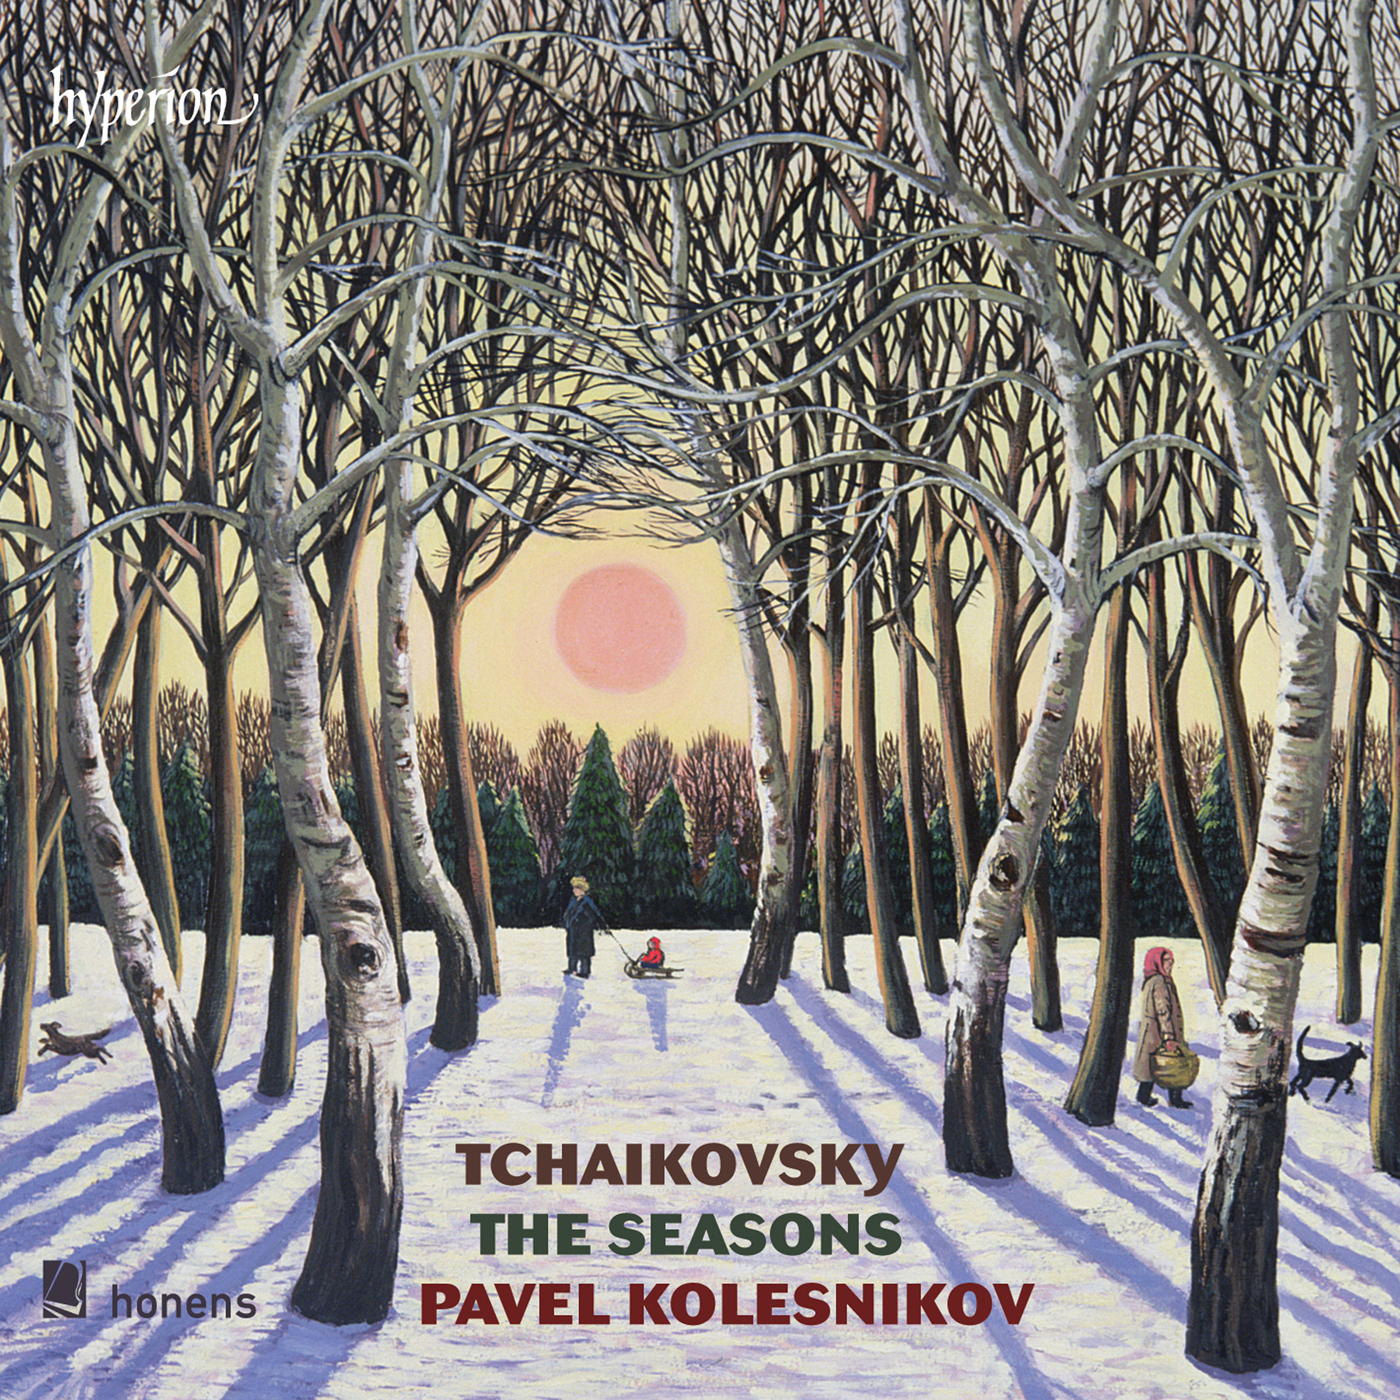 Tchaikovsky: The seasons